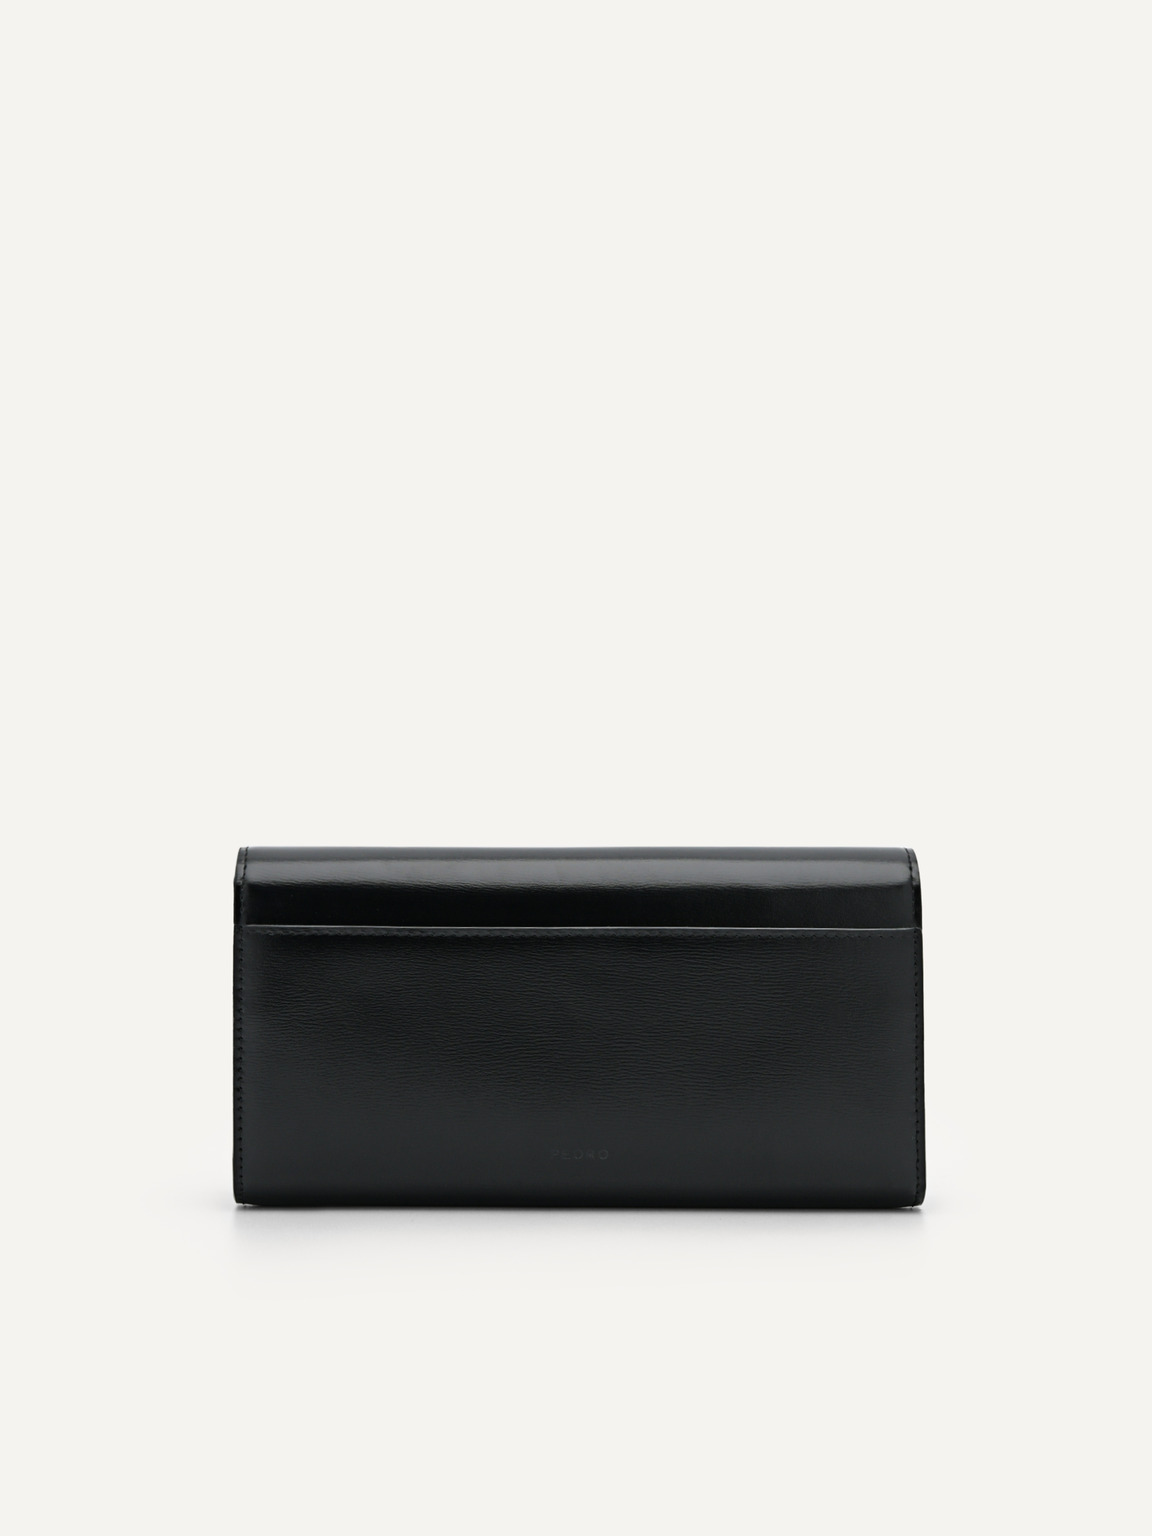 PEDRO工作室皮革雙折疊錢包, 黑色